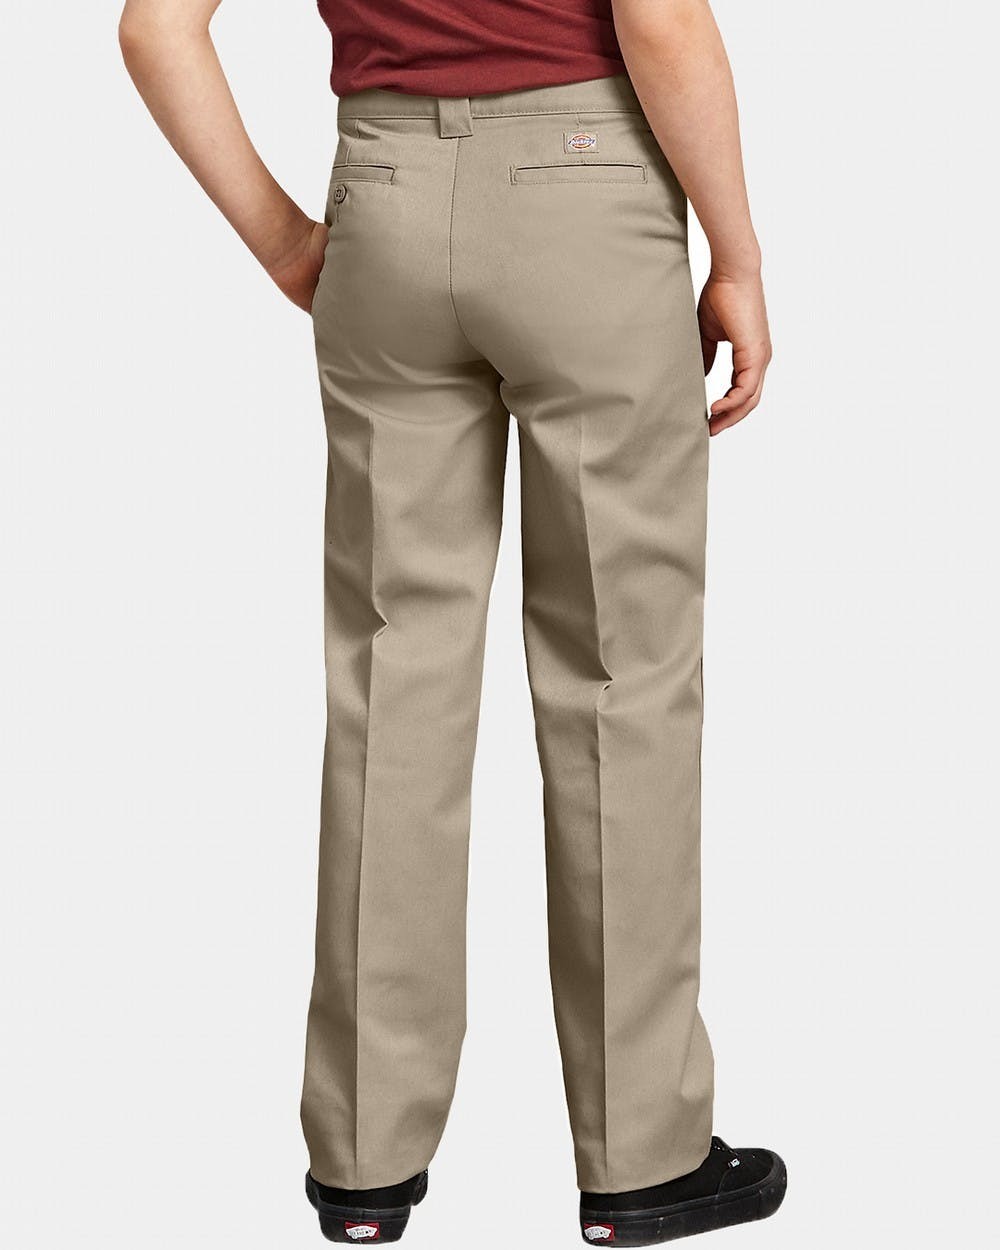 Big Saving Little Time,POROPL Fashion Solid Buttons Cotton Linen Casual  Loose Trouser Wide Leg Pants Beach Pants Clearance Black Size 10 -  Walmart.com